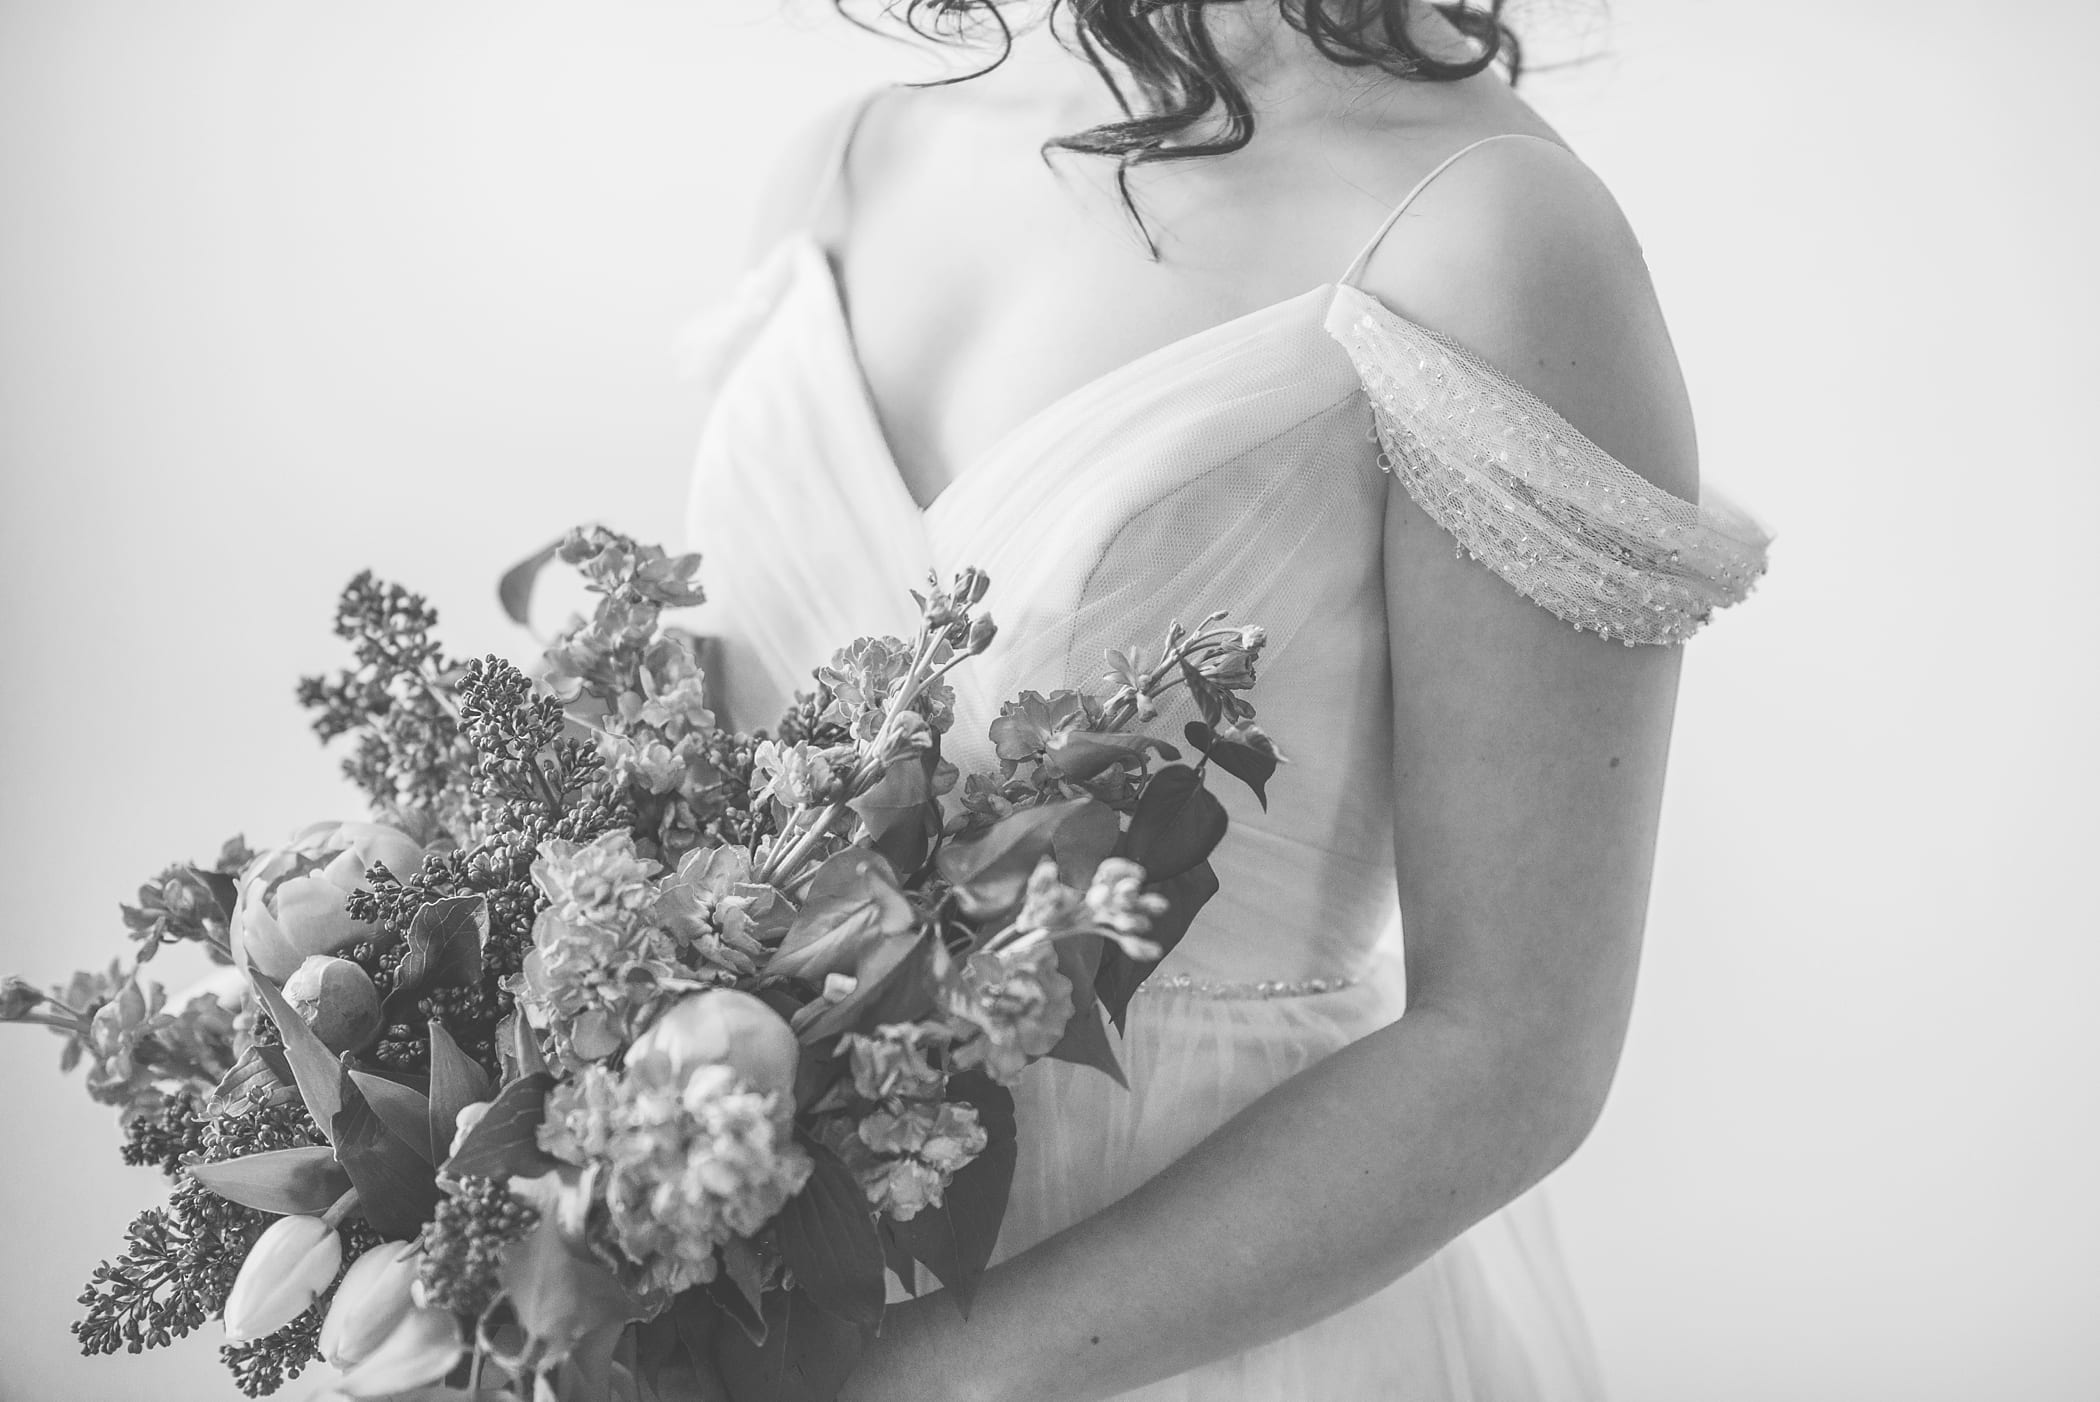 Spring Wedding Bouquet Colors by Michelle & Logan Photo+Films